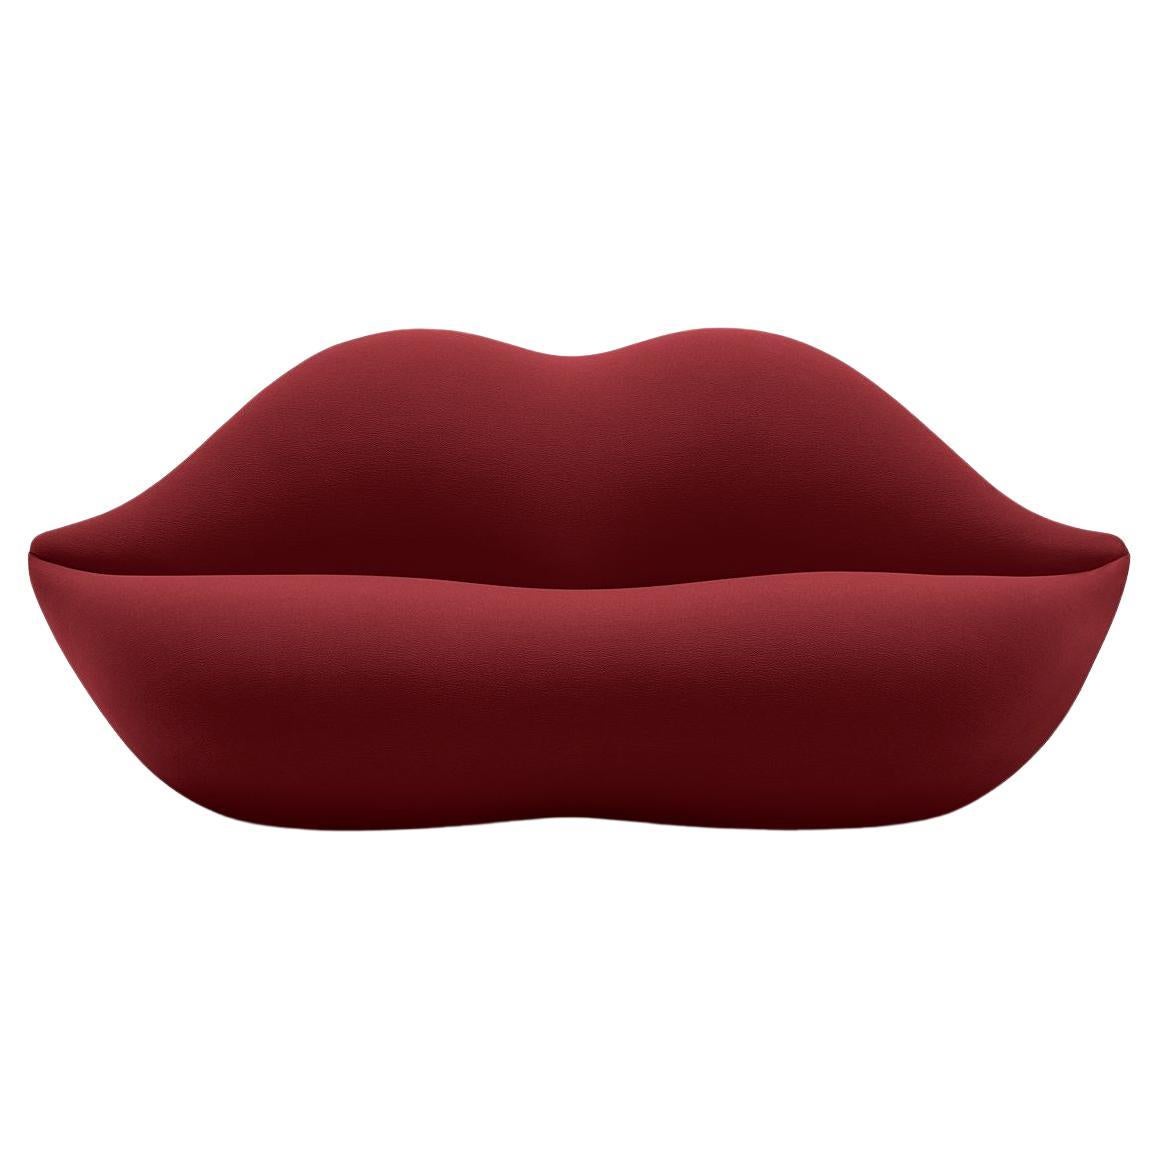 Gufram, canapé Bocca en forme de lèvre, cerisier, Studio 65 en vente